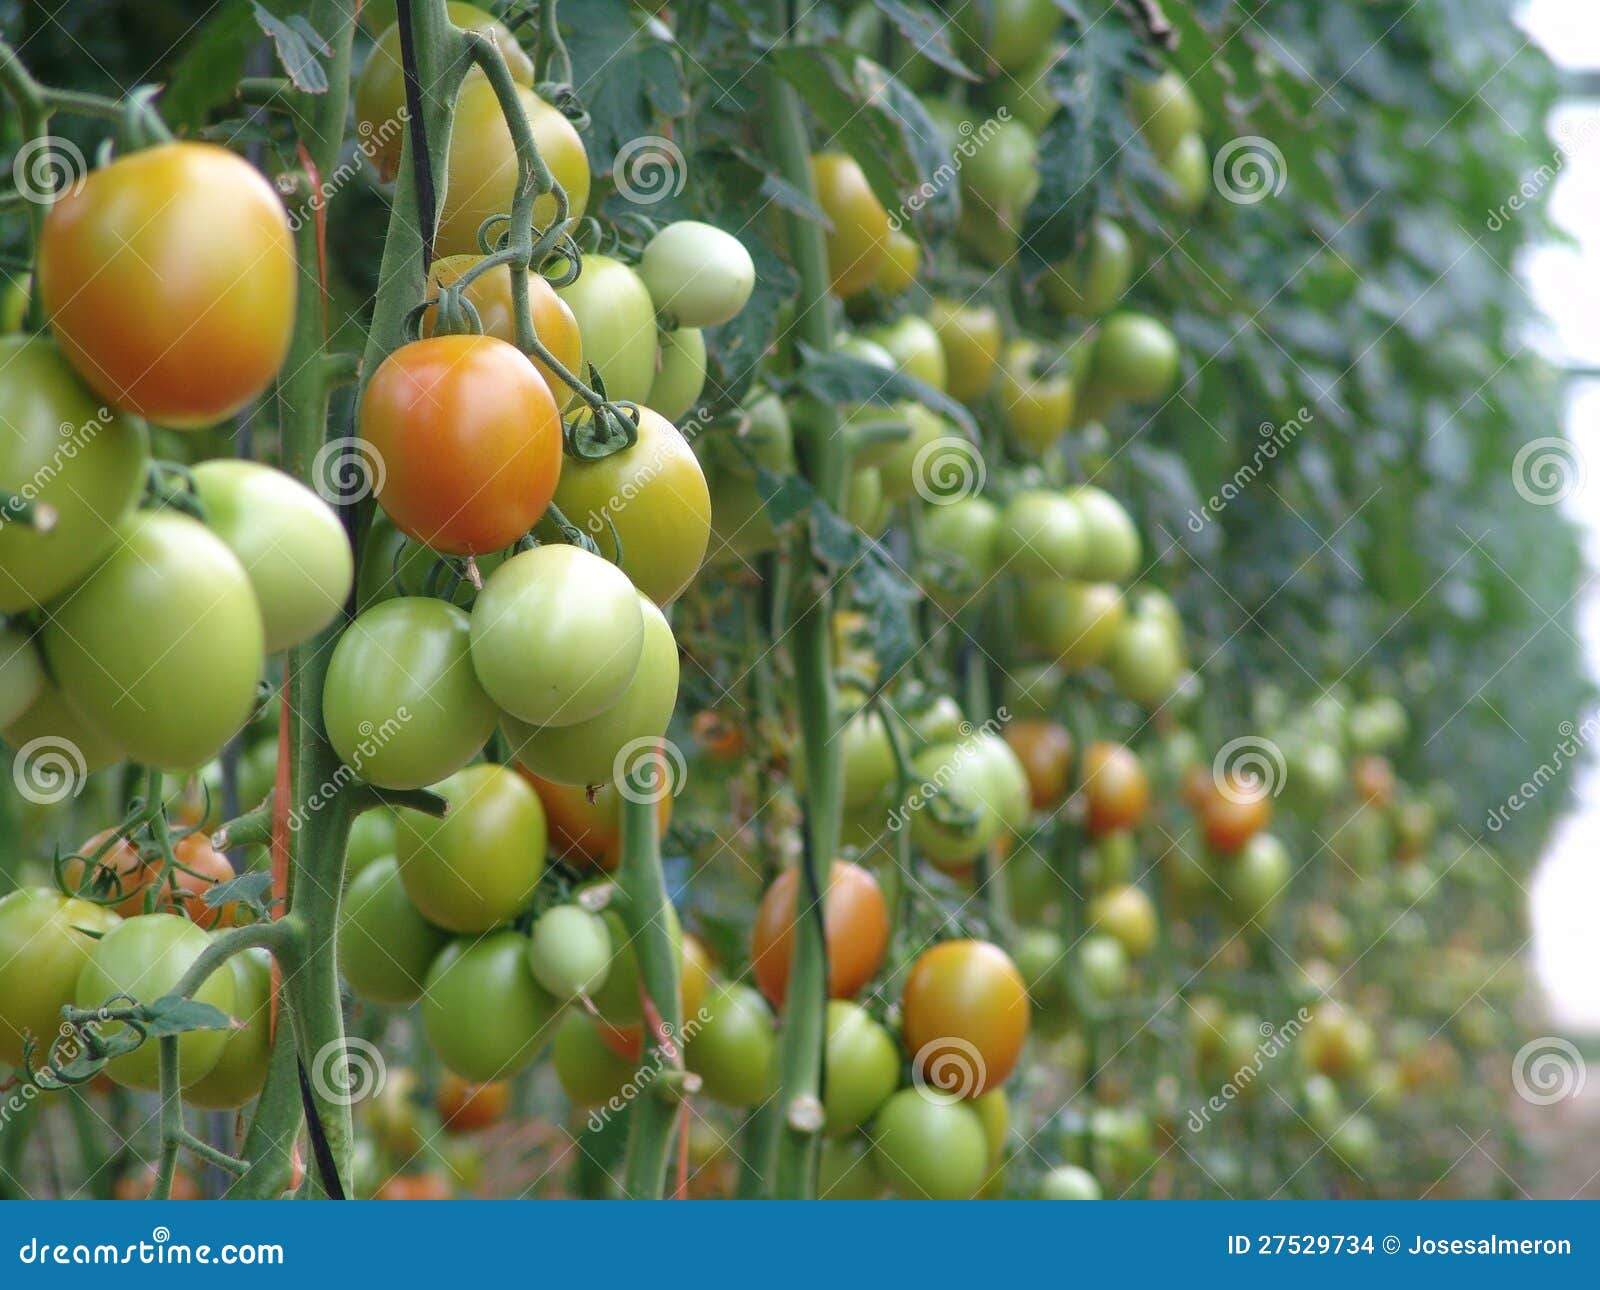 tomatoes on almeria greenhouse.